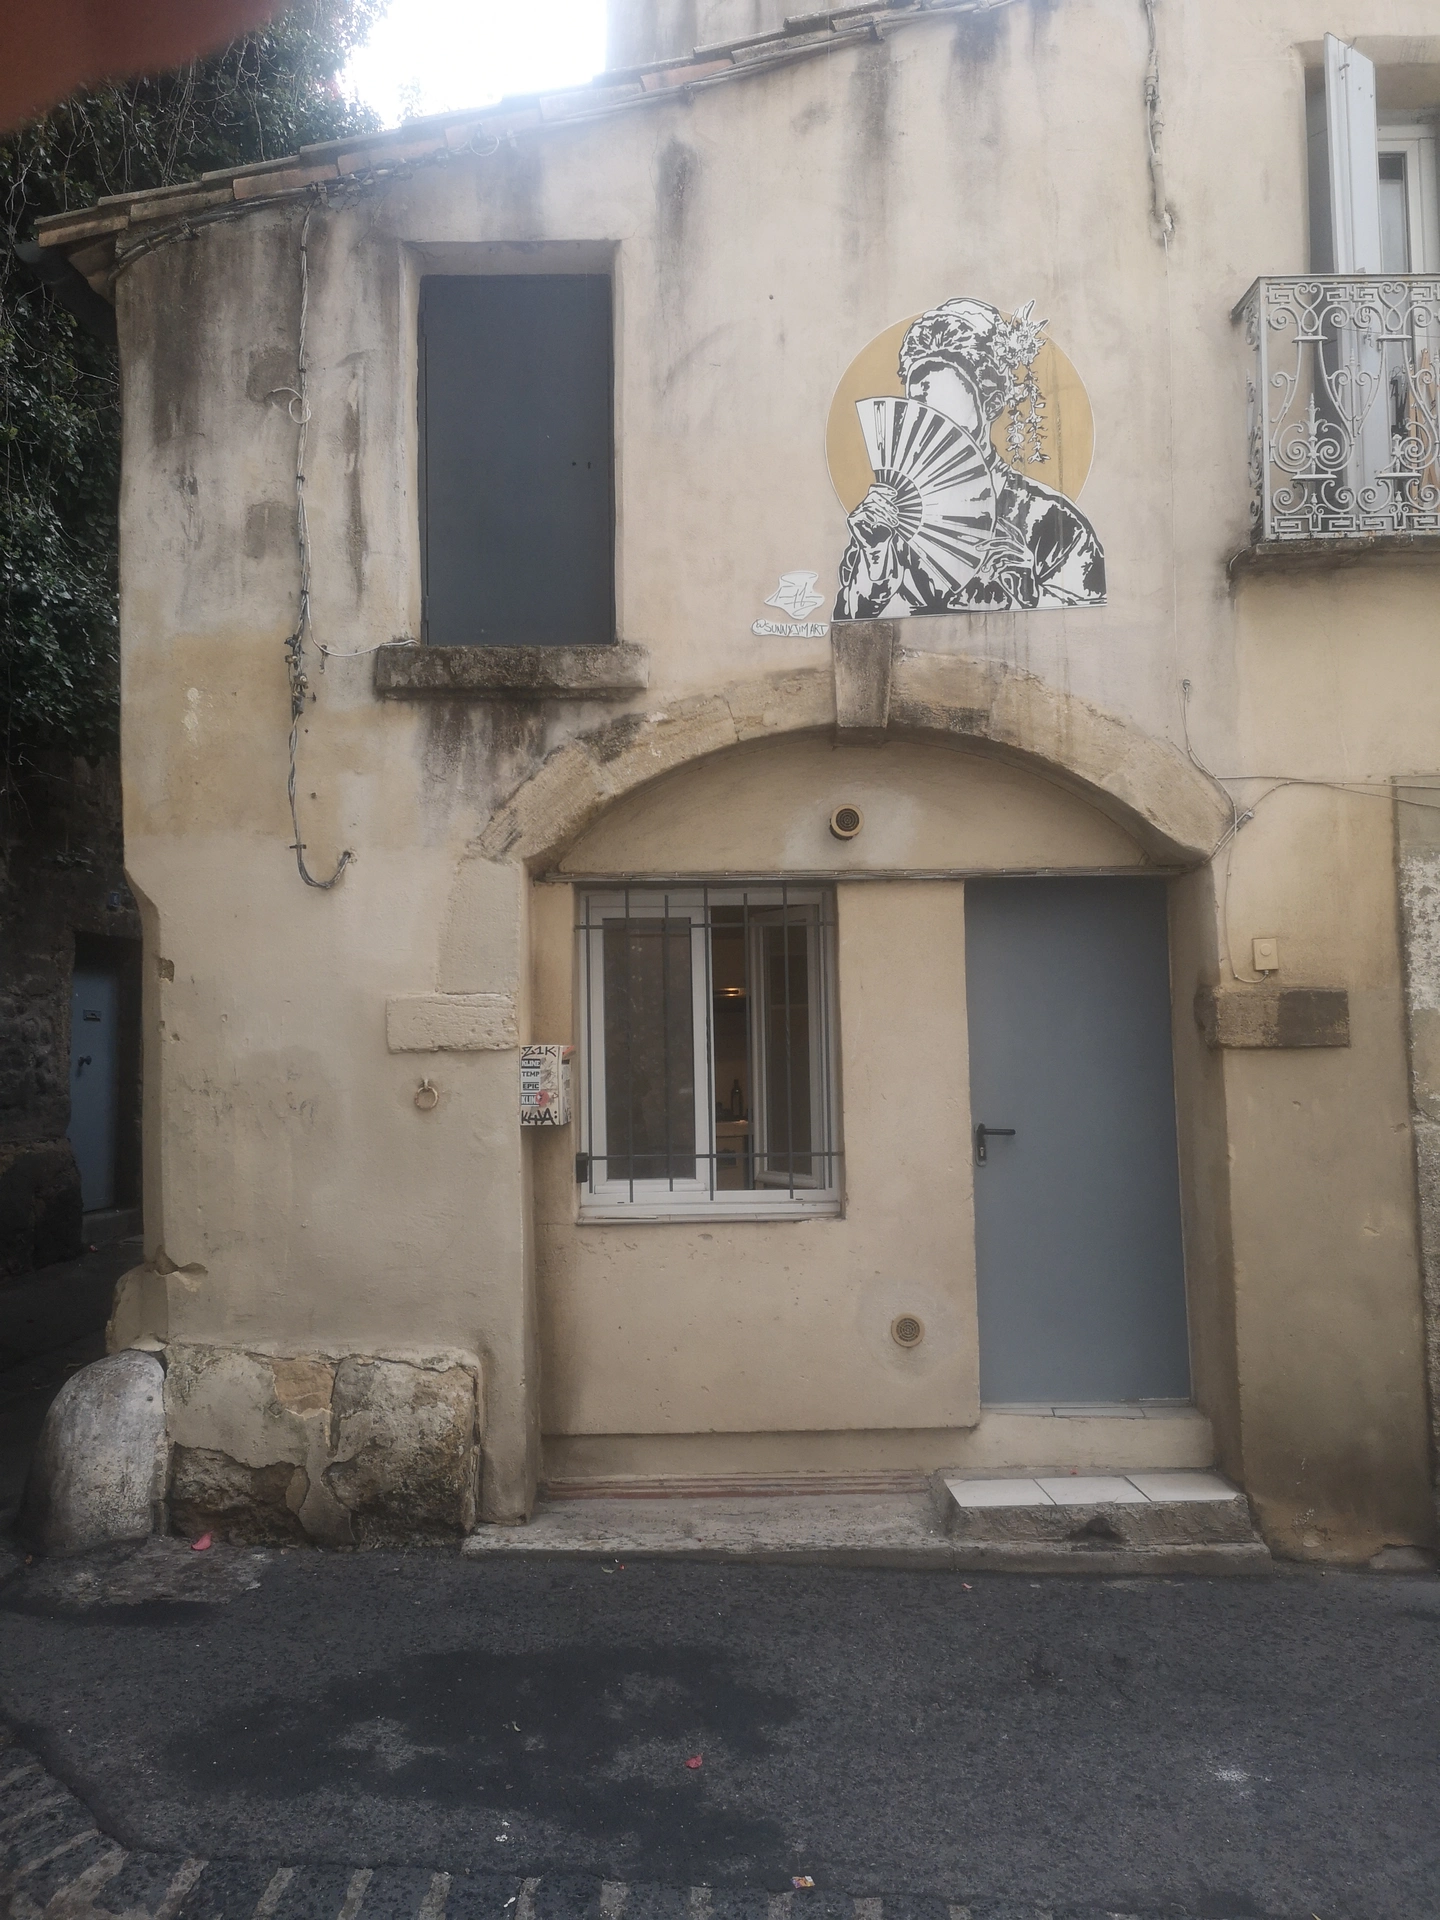 Oeuvre de Street Art à Montpellier